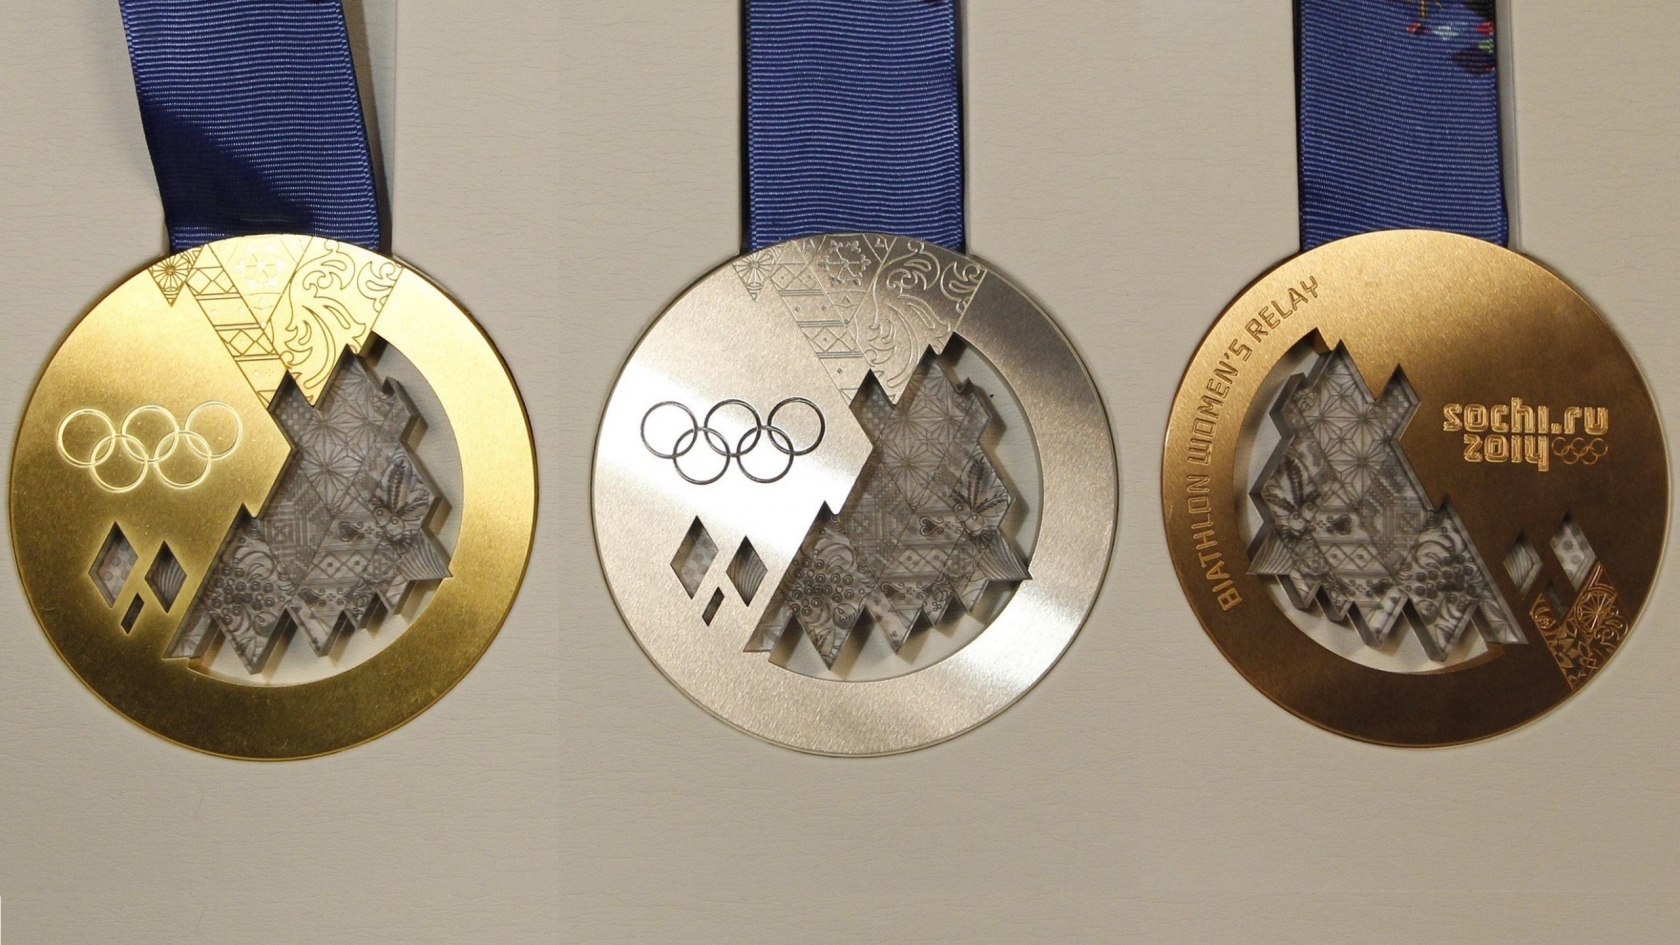 Sochi 2014 Medals for 1680 x 945 HDTV resolution